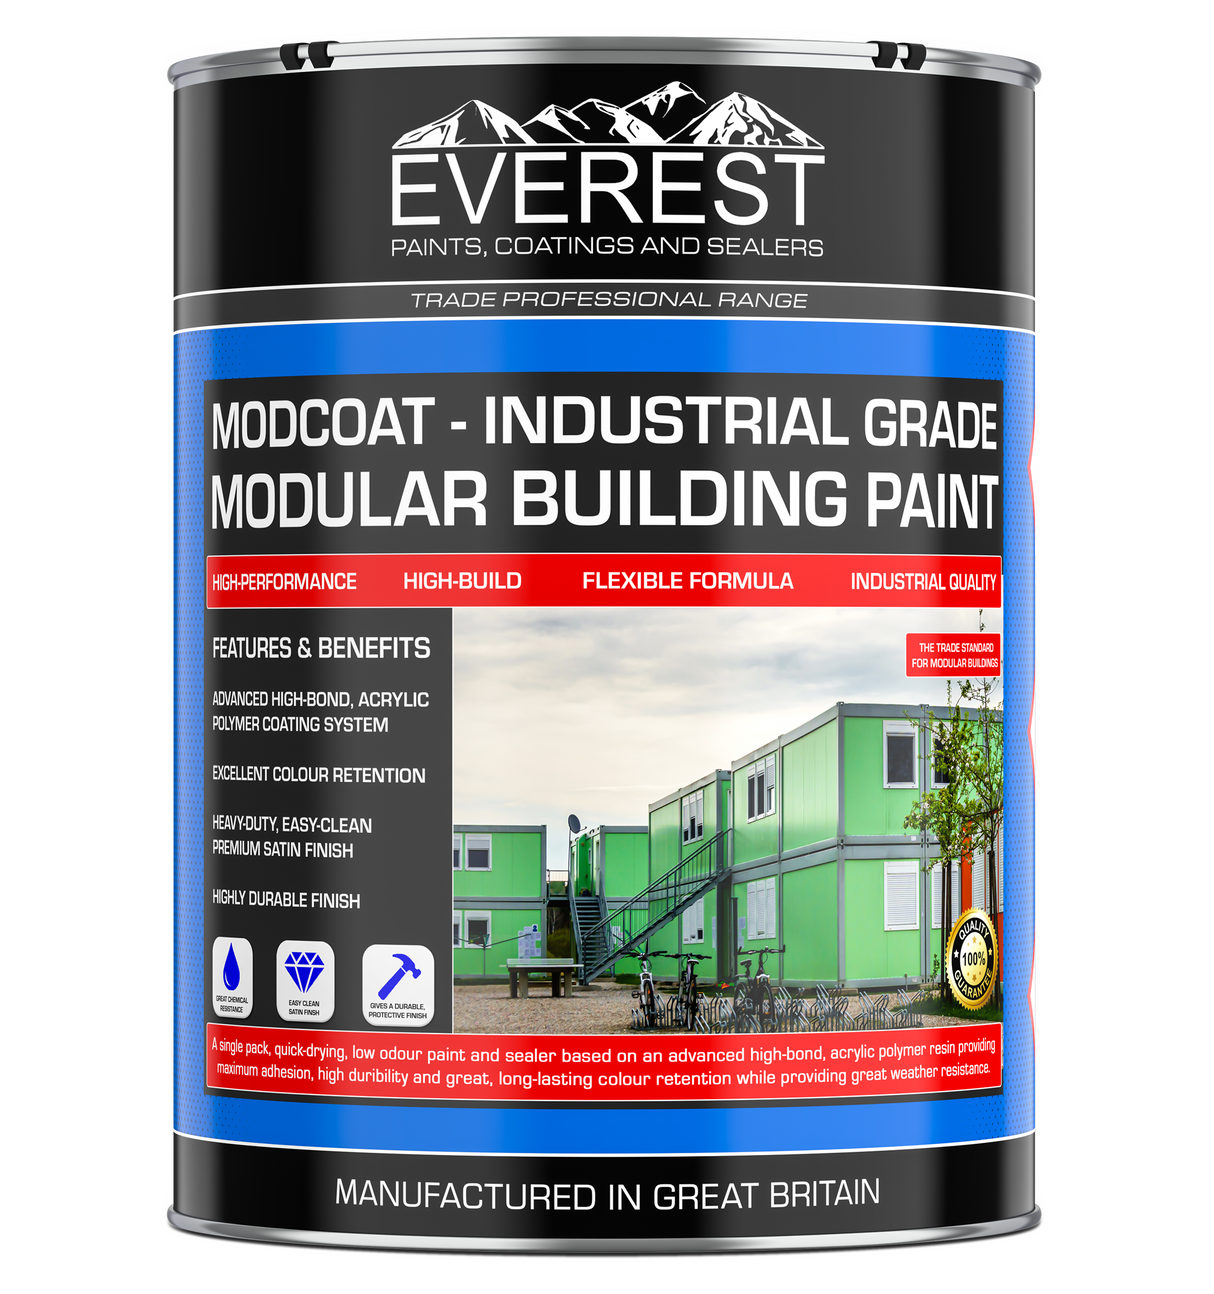 Everest Paints - MODCOAT - Industrial Grade Modular Building Paint - High Build Coating